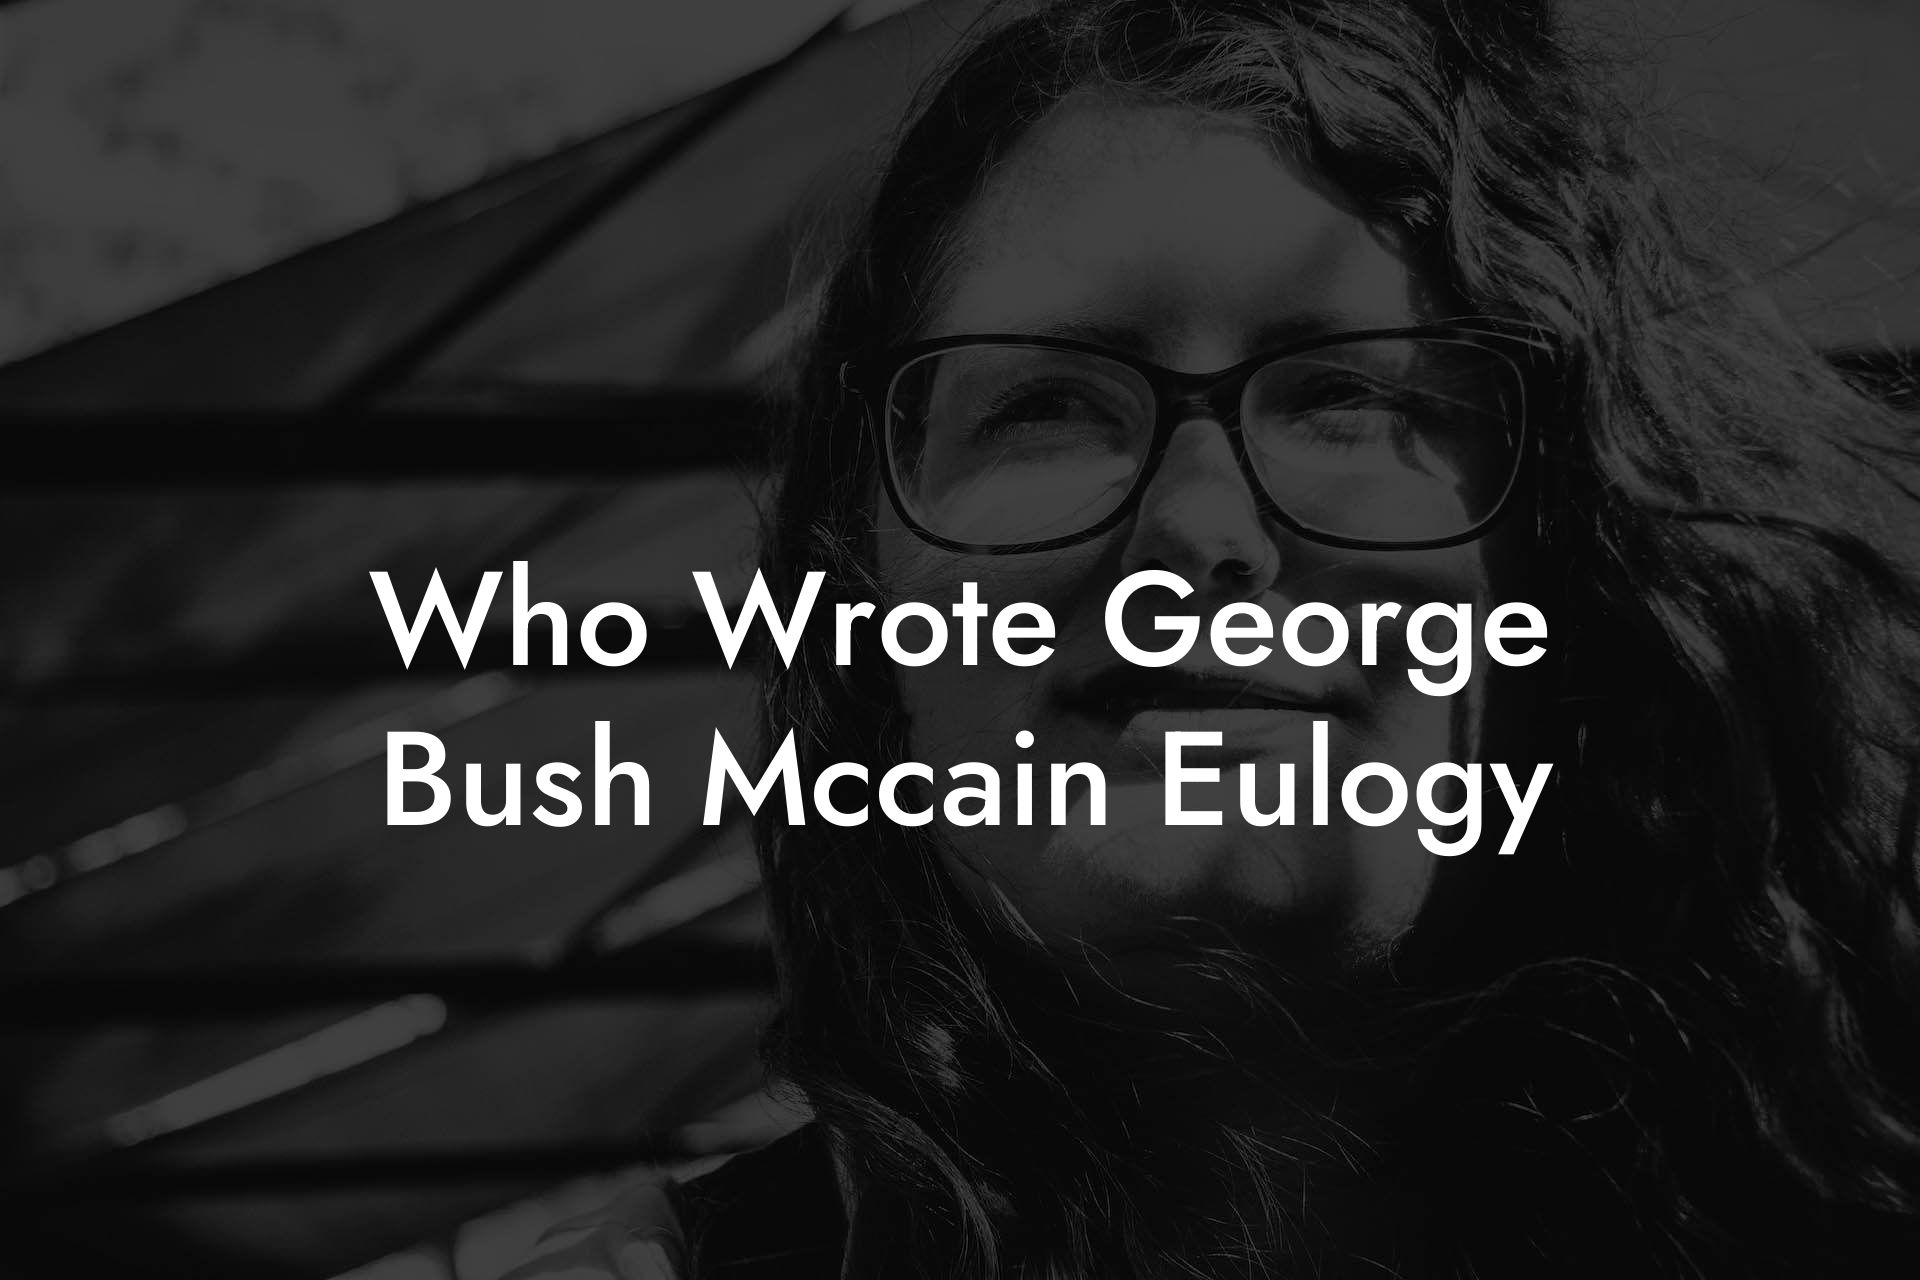 Who Wrote George Bush Mccain Eulogy